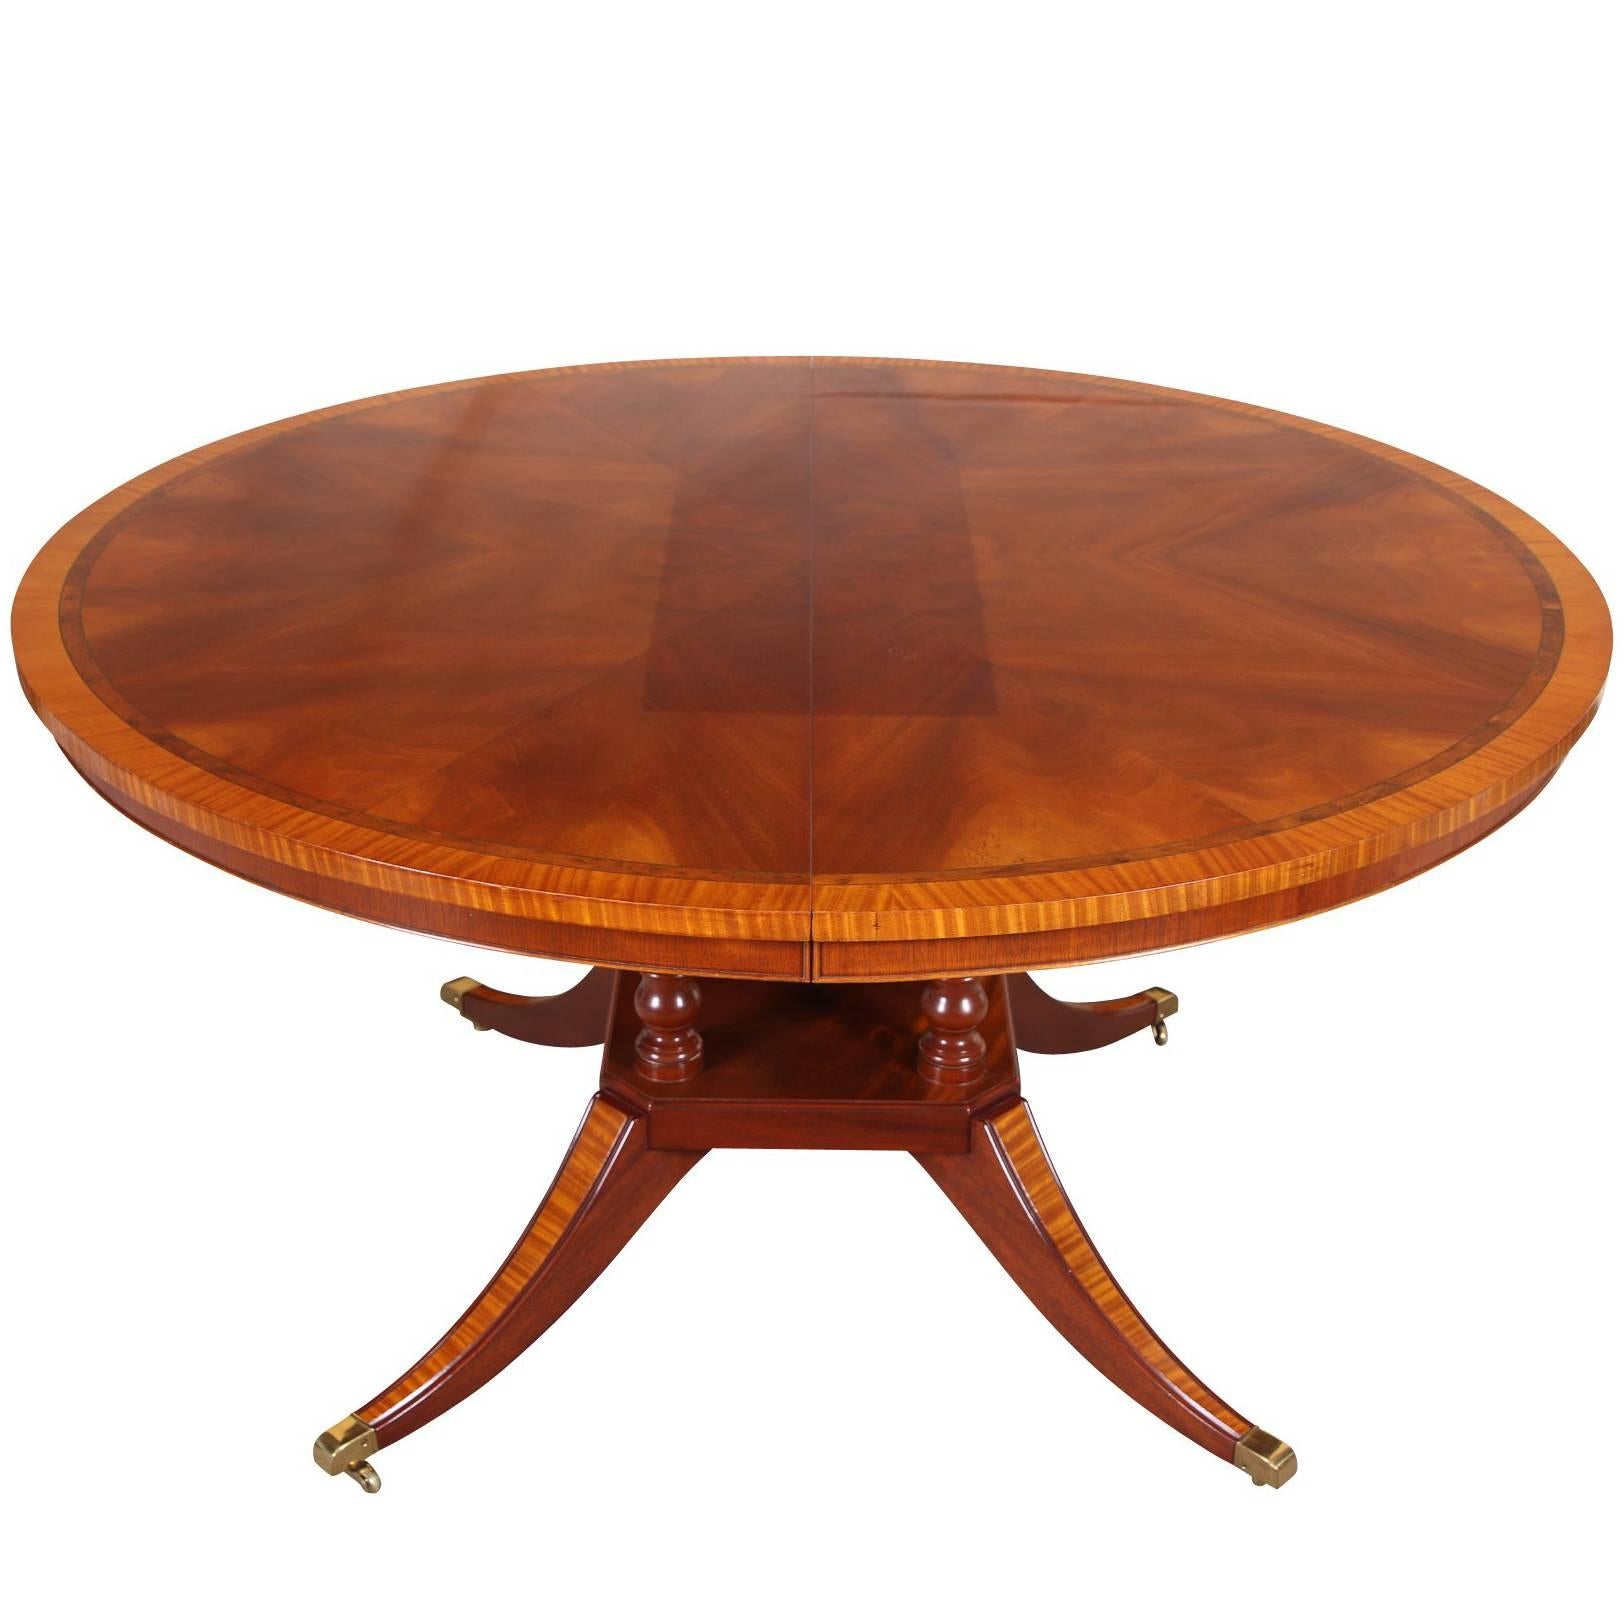 Regency Style Round Banded Mahogany Dining Table